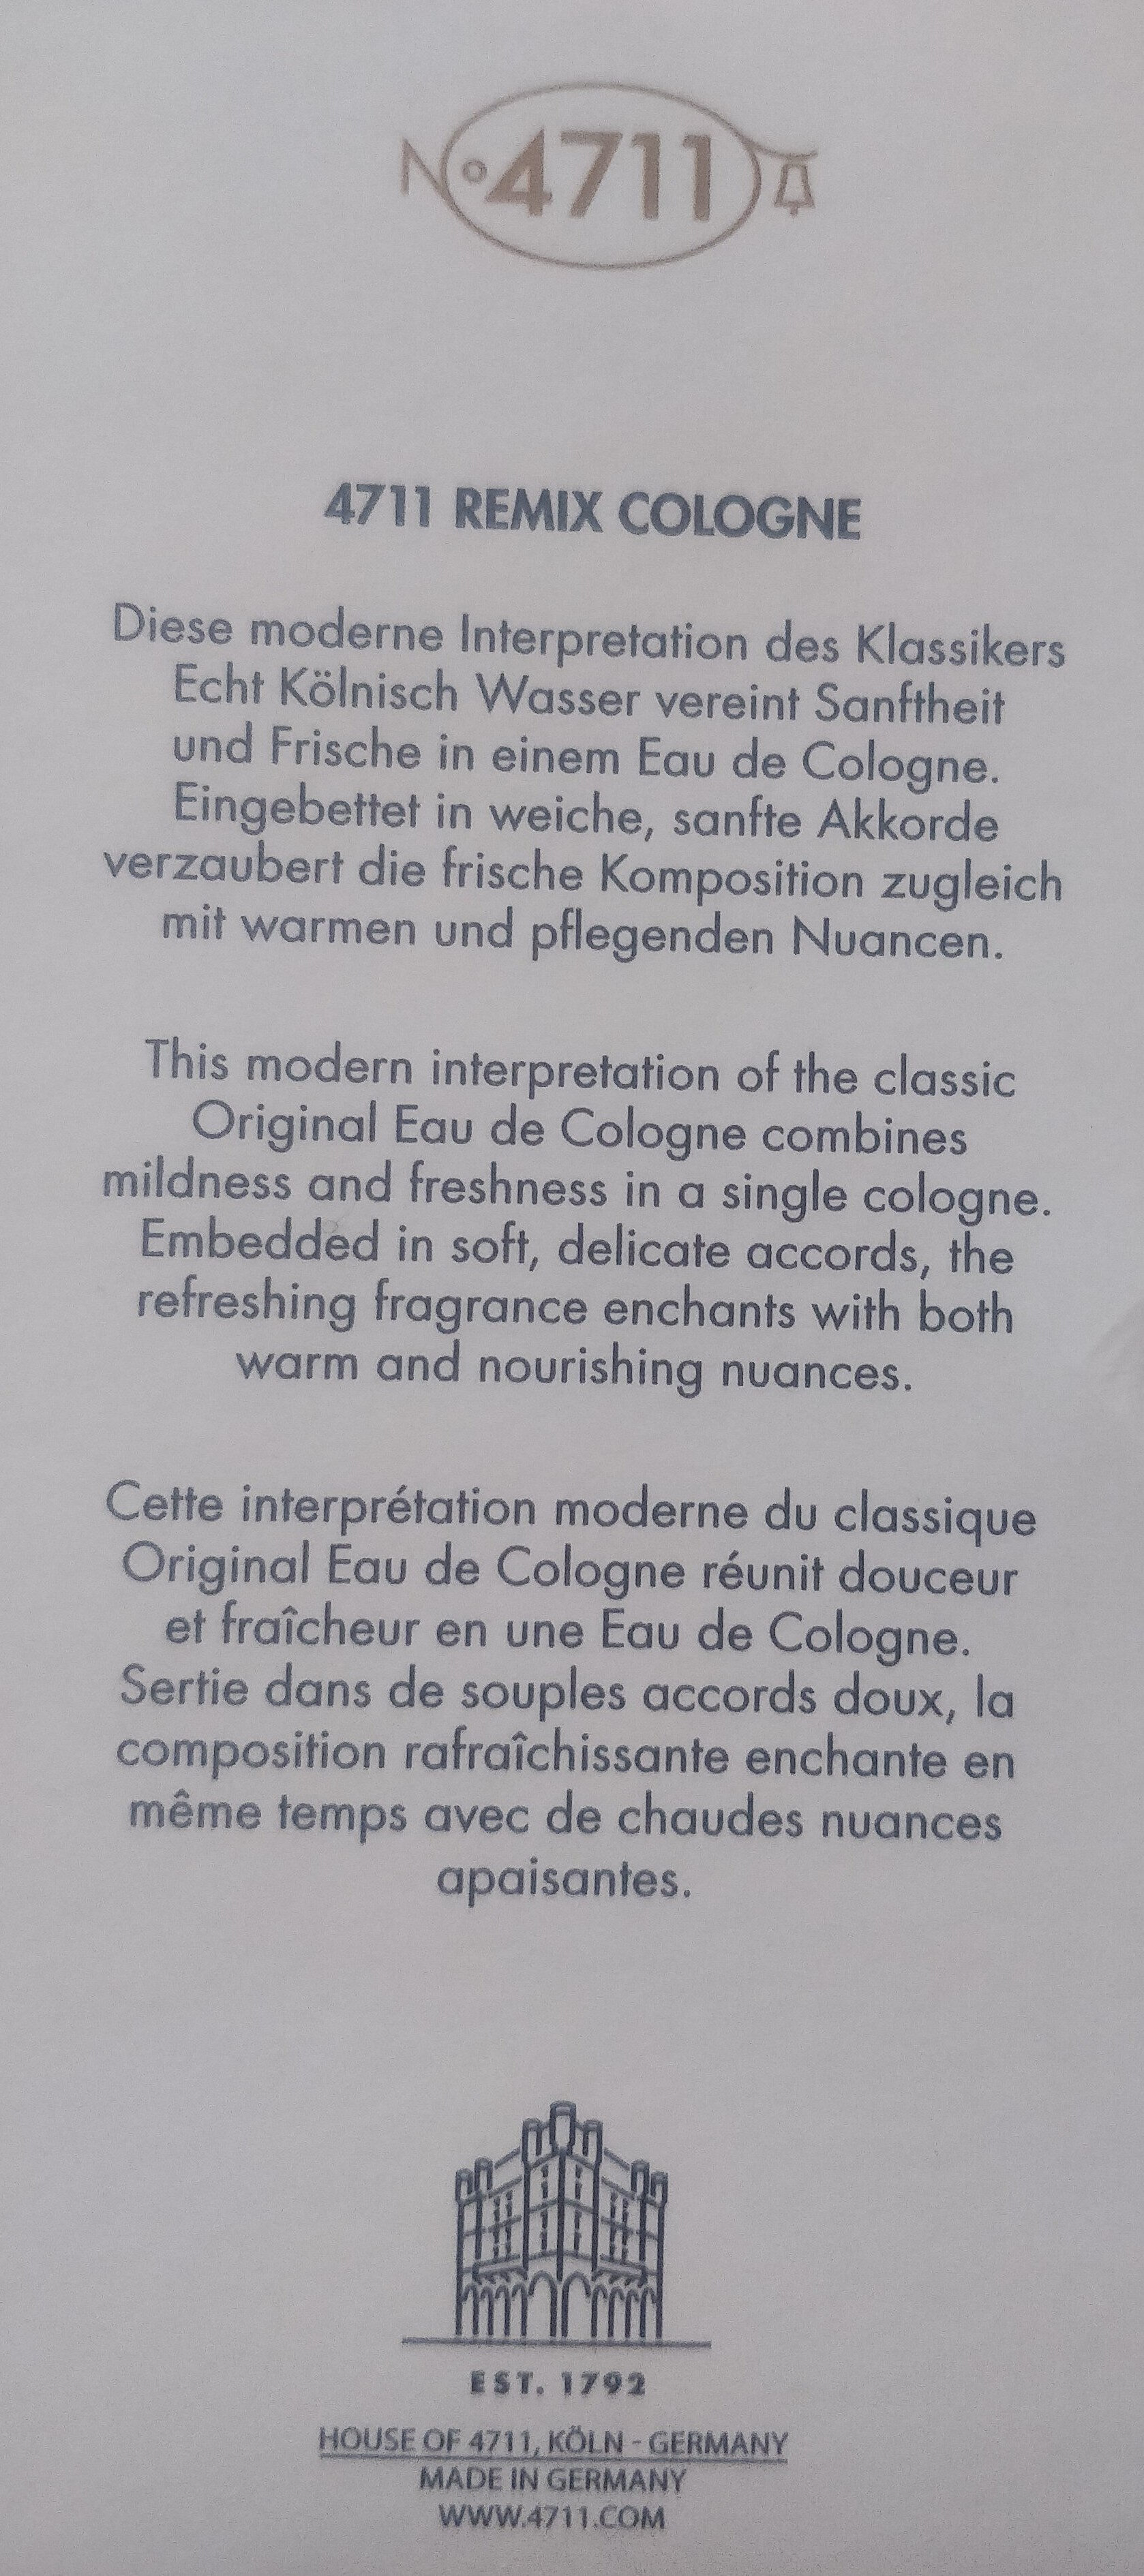 no 4711 Remix Cologne Anniversary Edition - Product - en